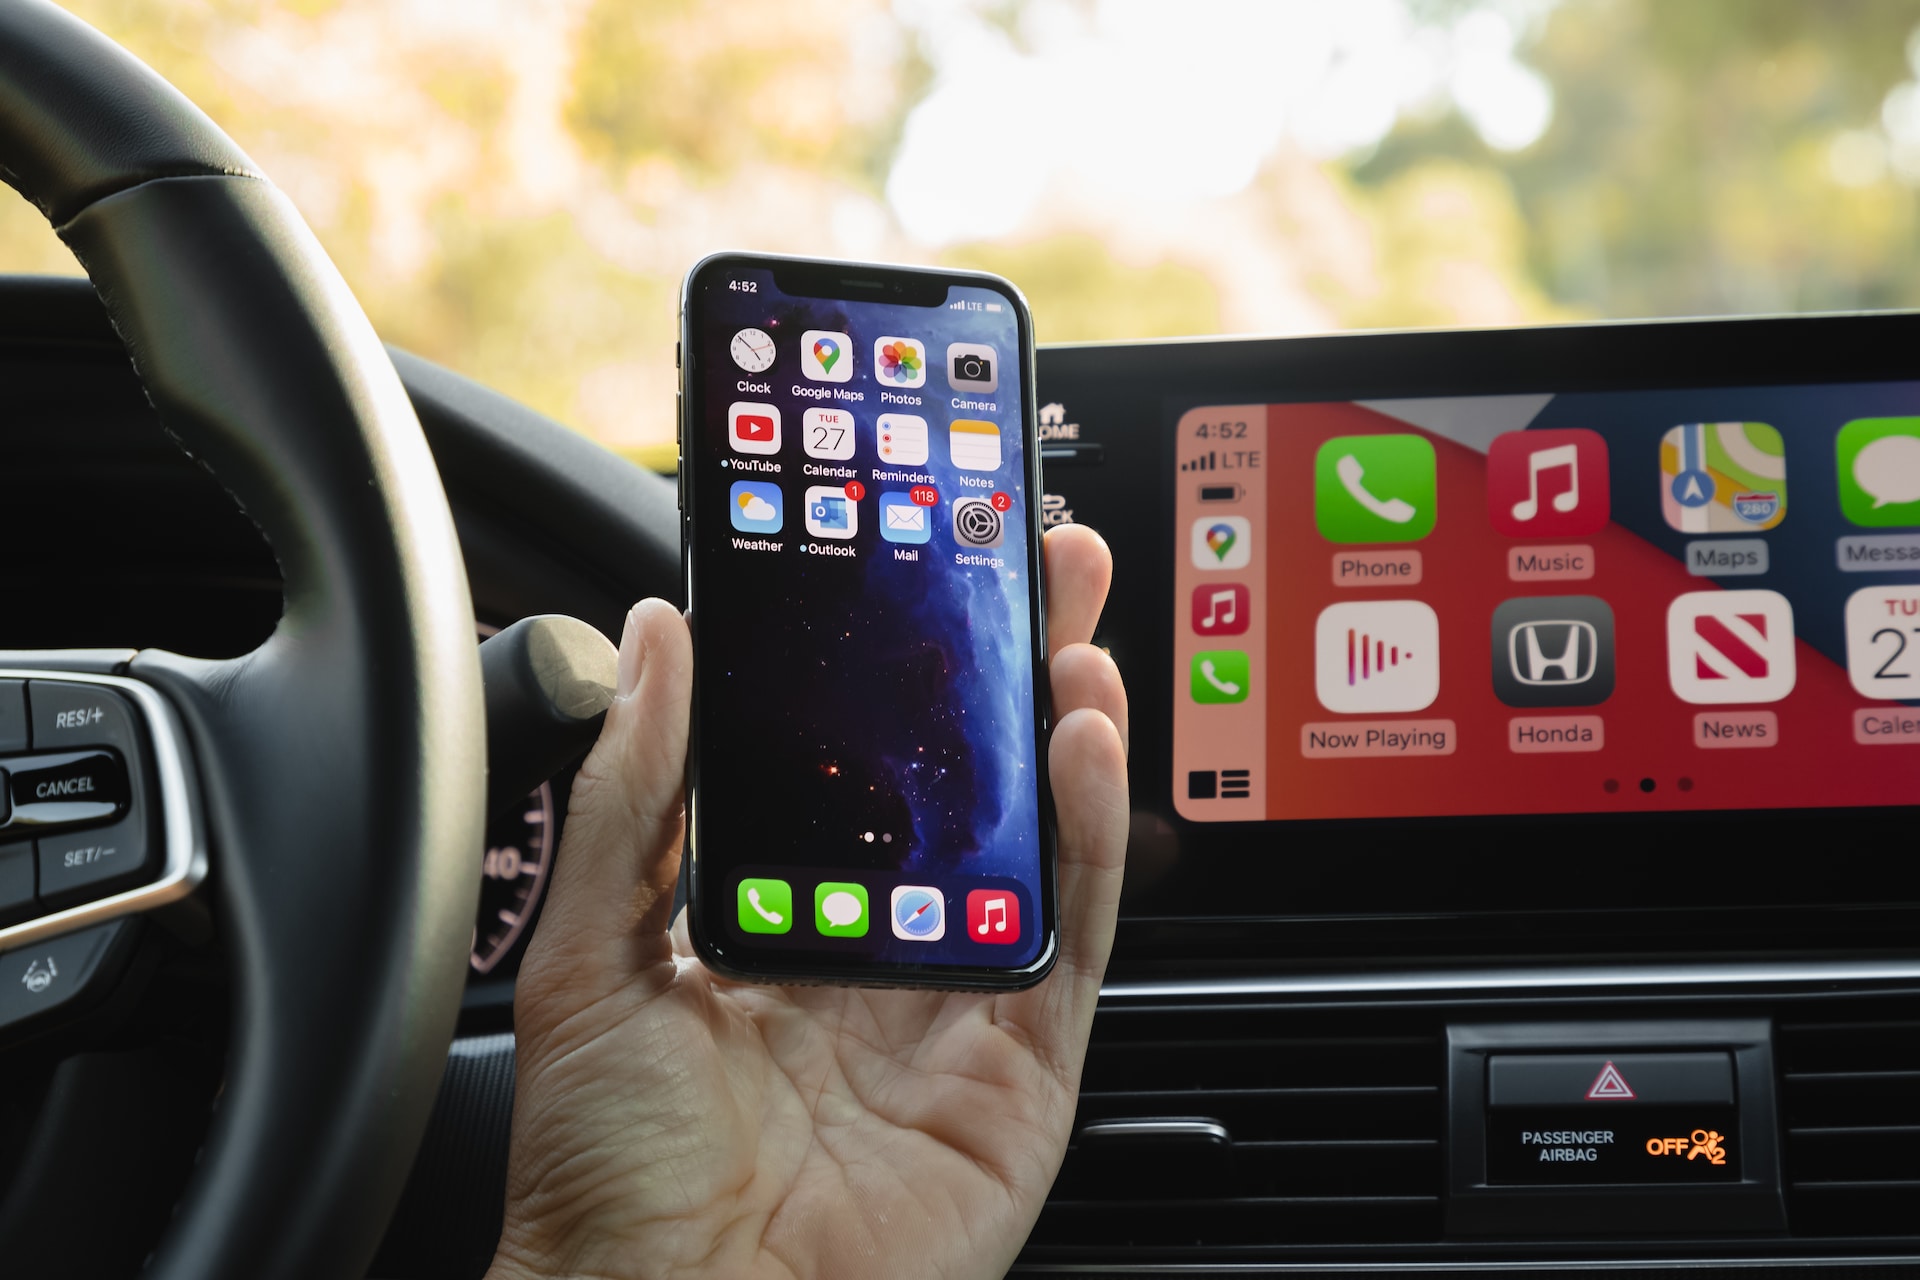 Honda Car Connectivity: Connecting IPhone To Honda Bluetooth